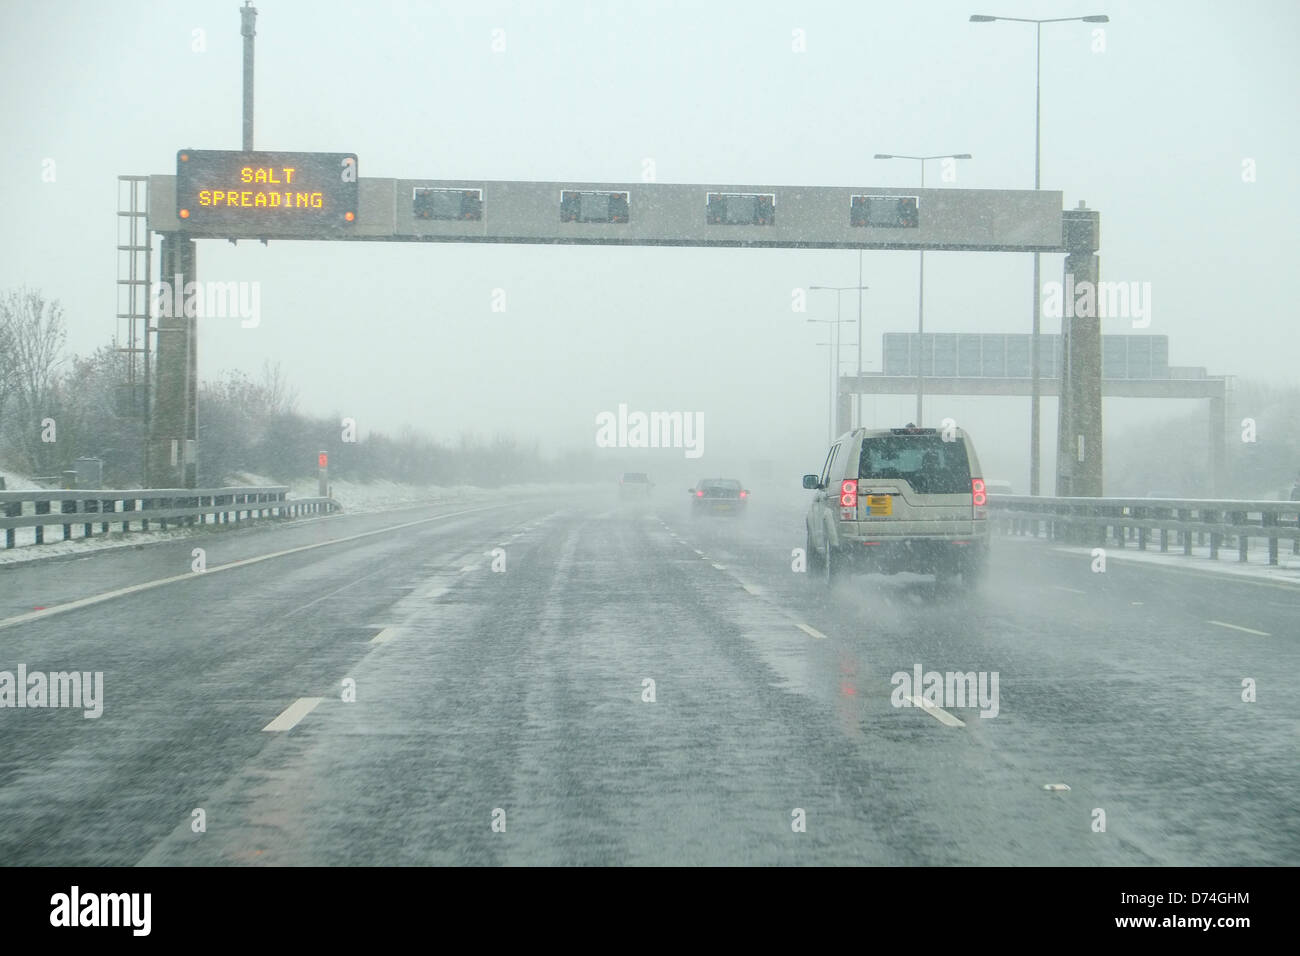 Driving on Motorway in poor Weather Conditions, UK Stock Photo